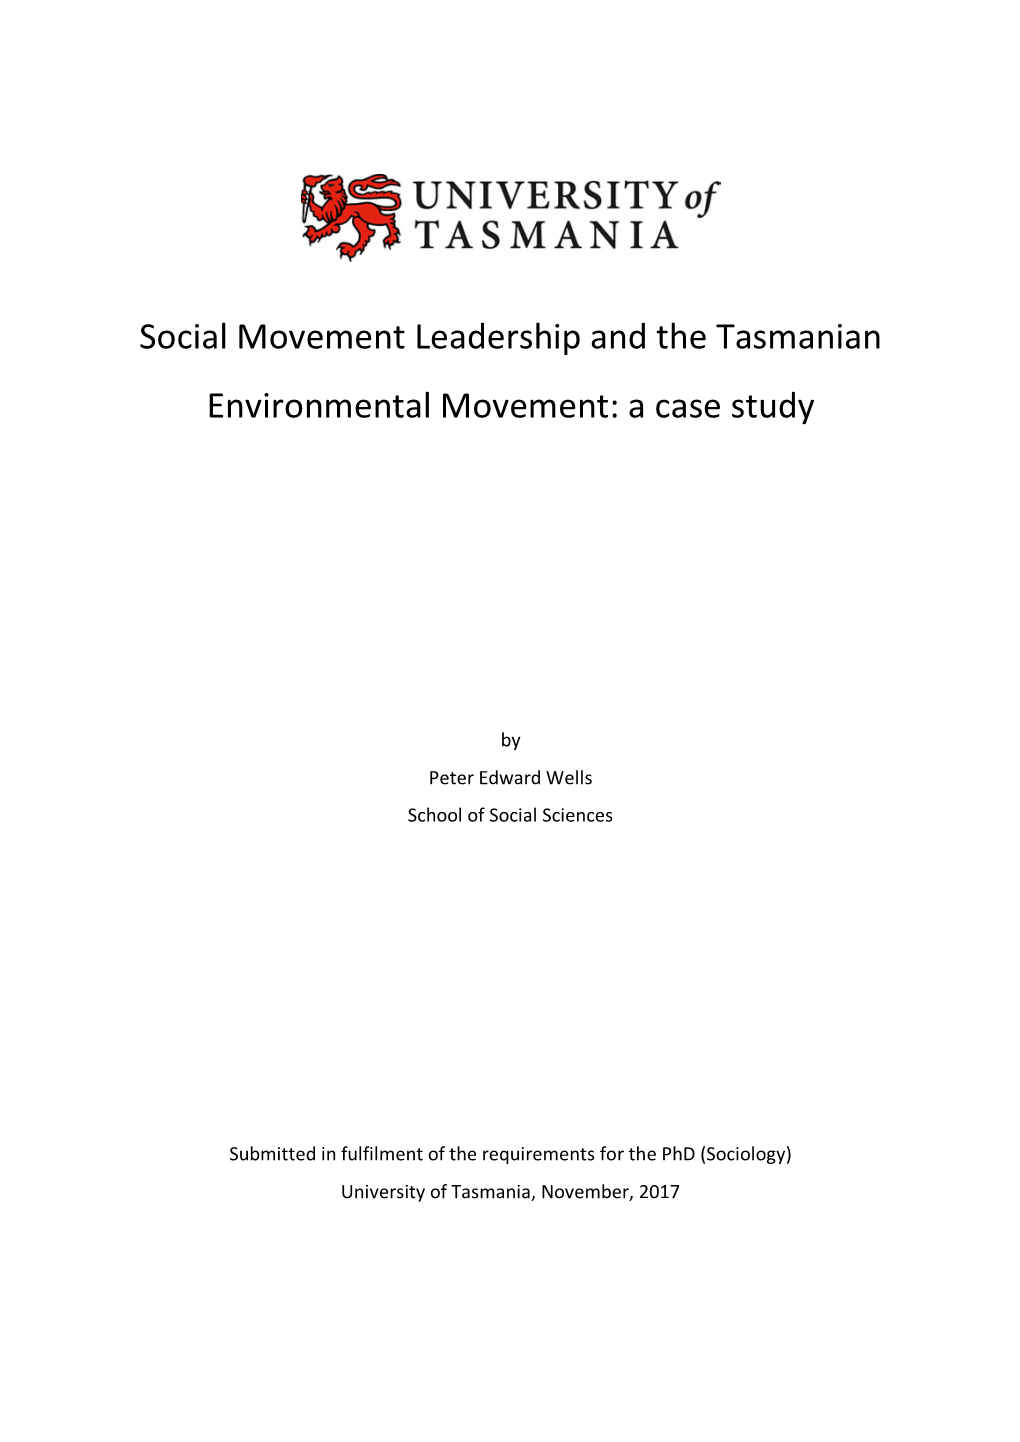 Social Movement Leadership and the Tasmanian Environmental Movement: a Case Study